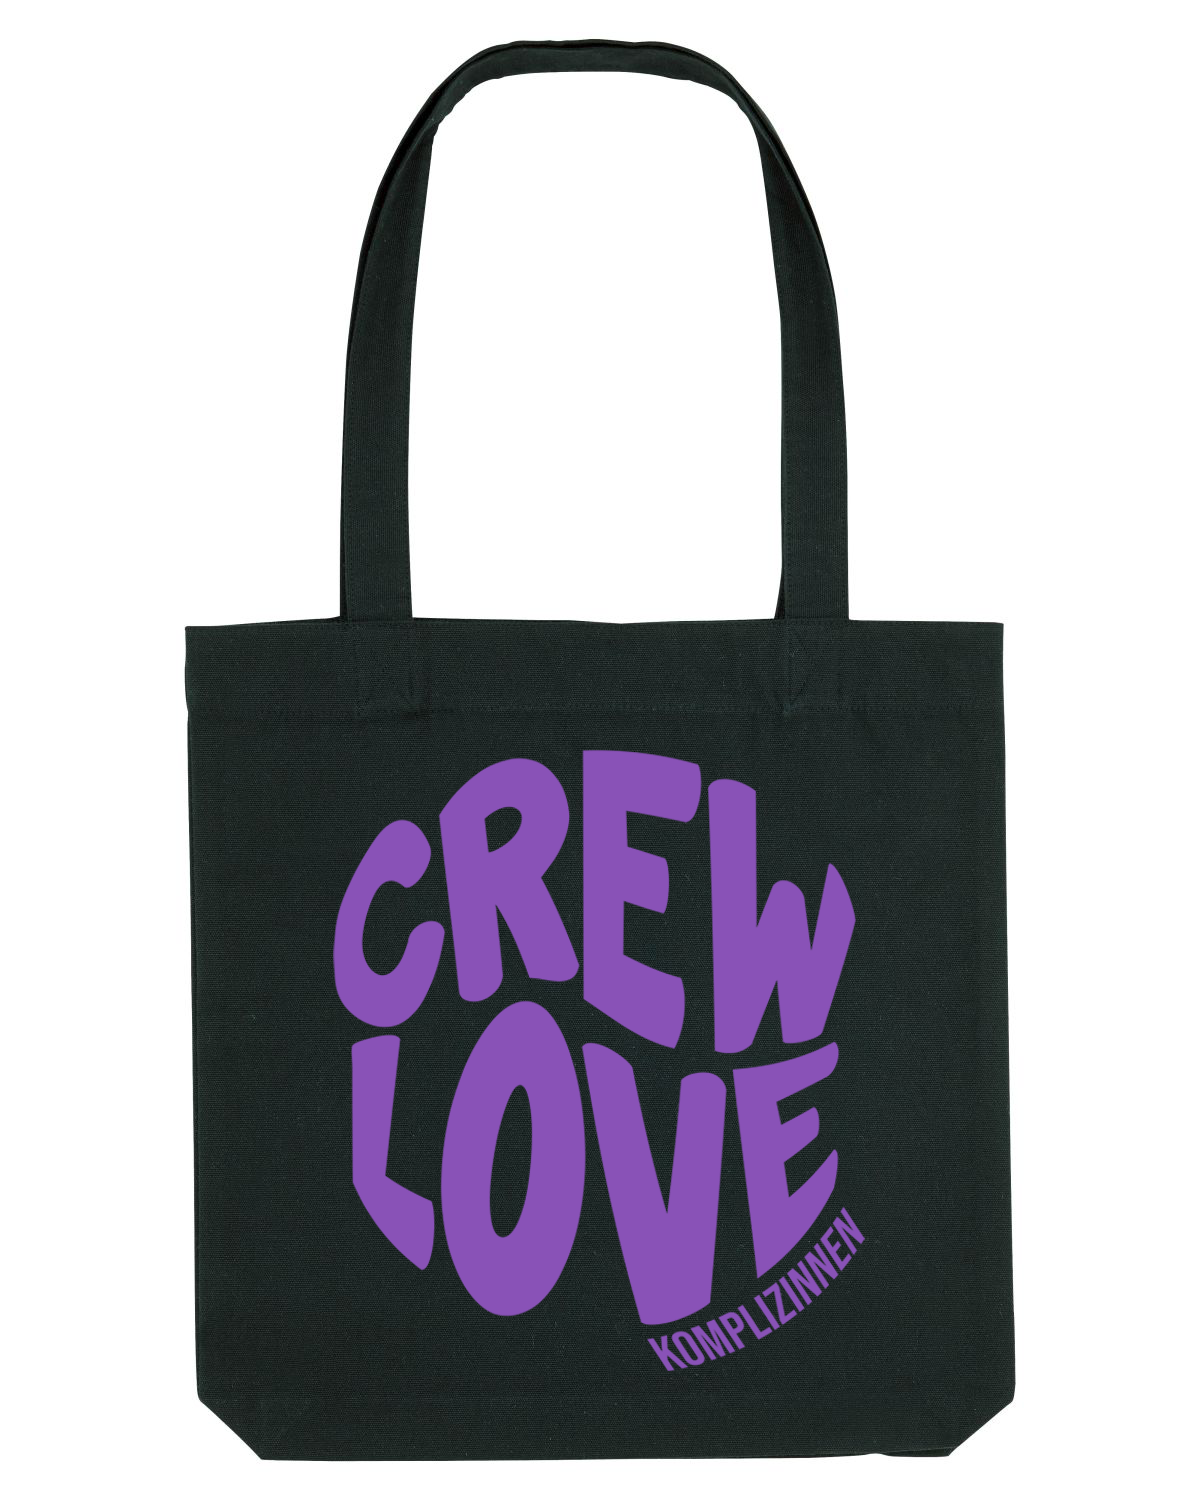 CREWLOVE (NEW) bag black